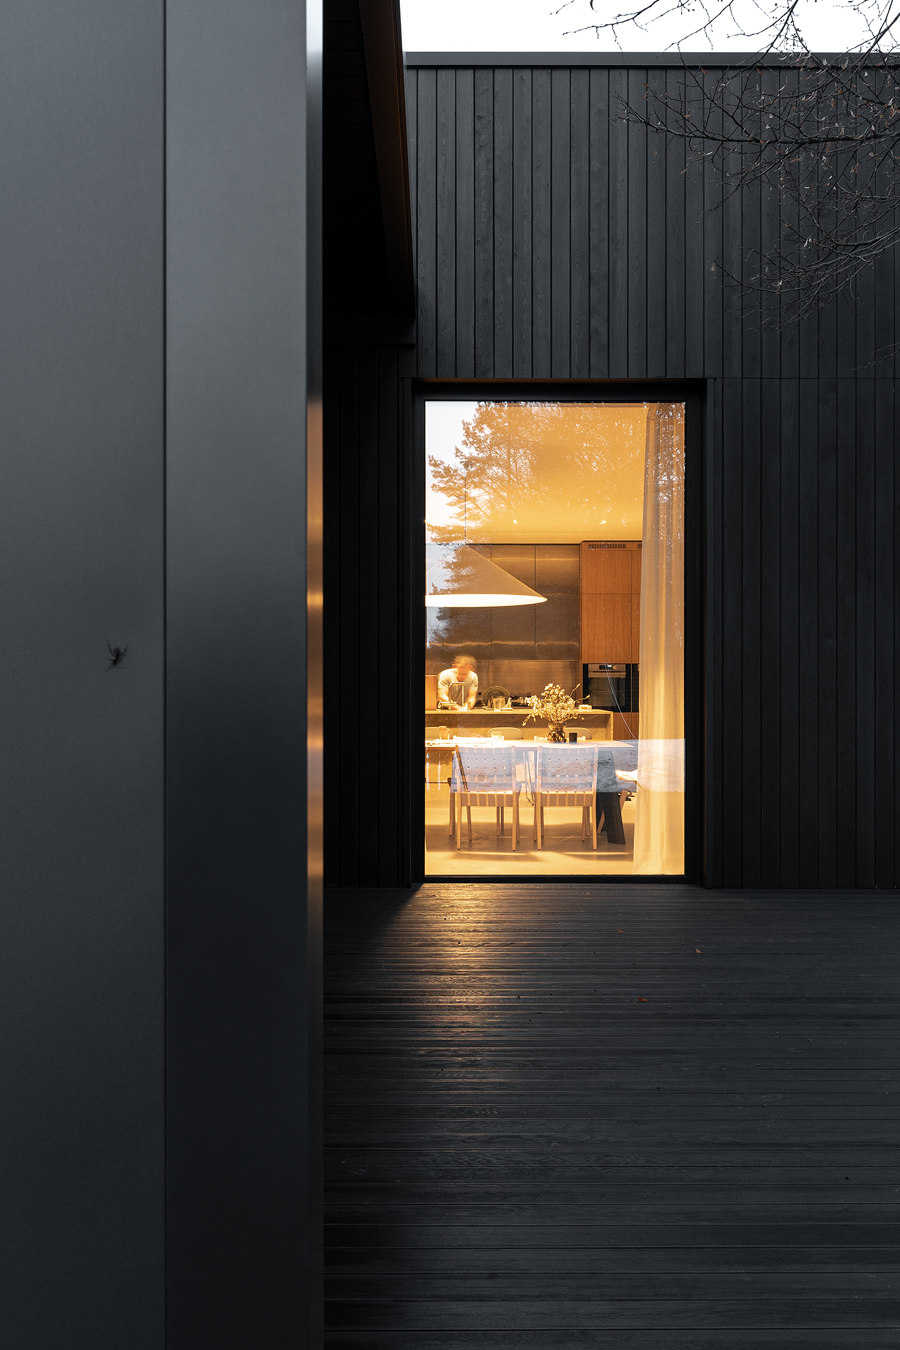 RYABINKI by AKZ Architectura | Living space